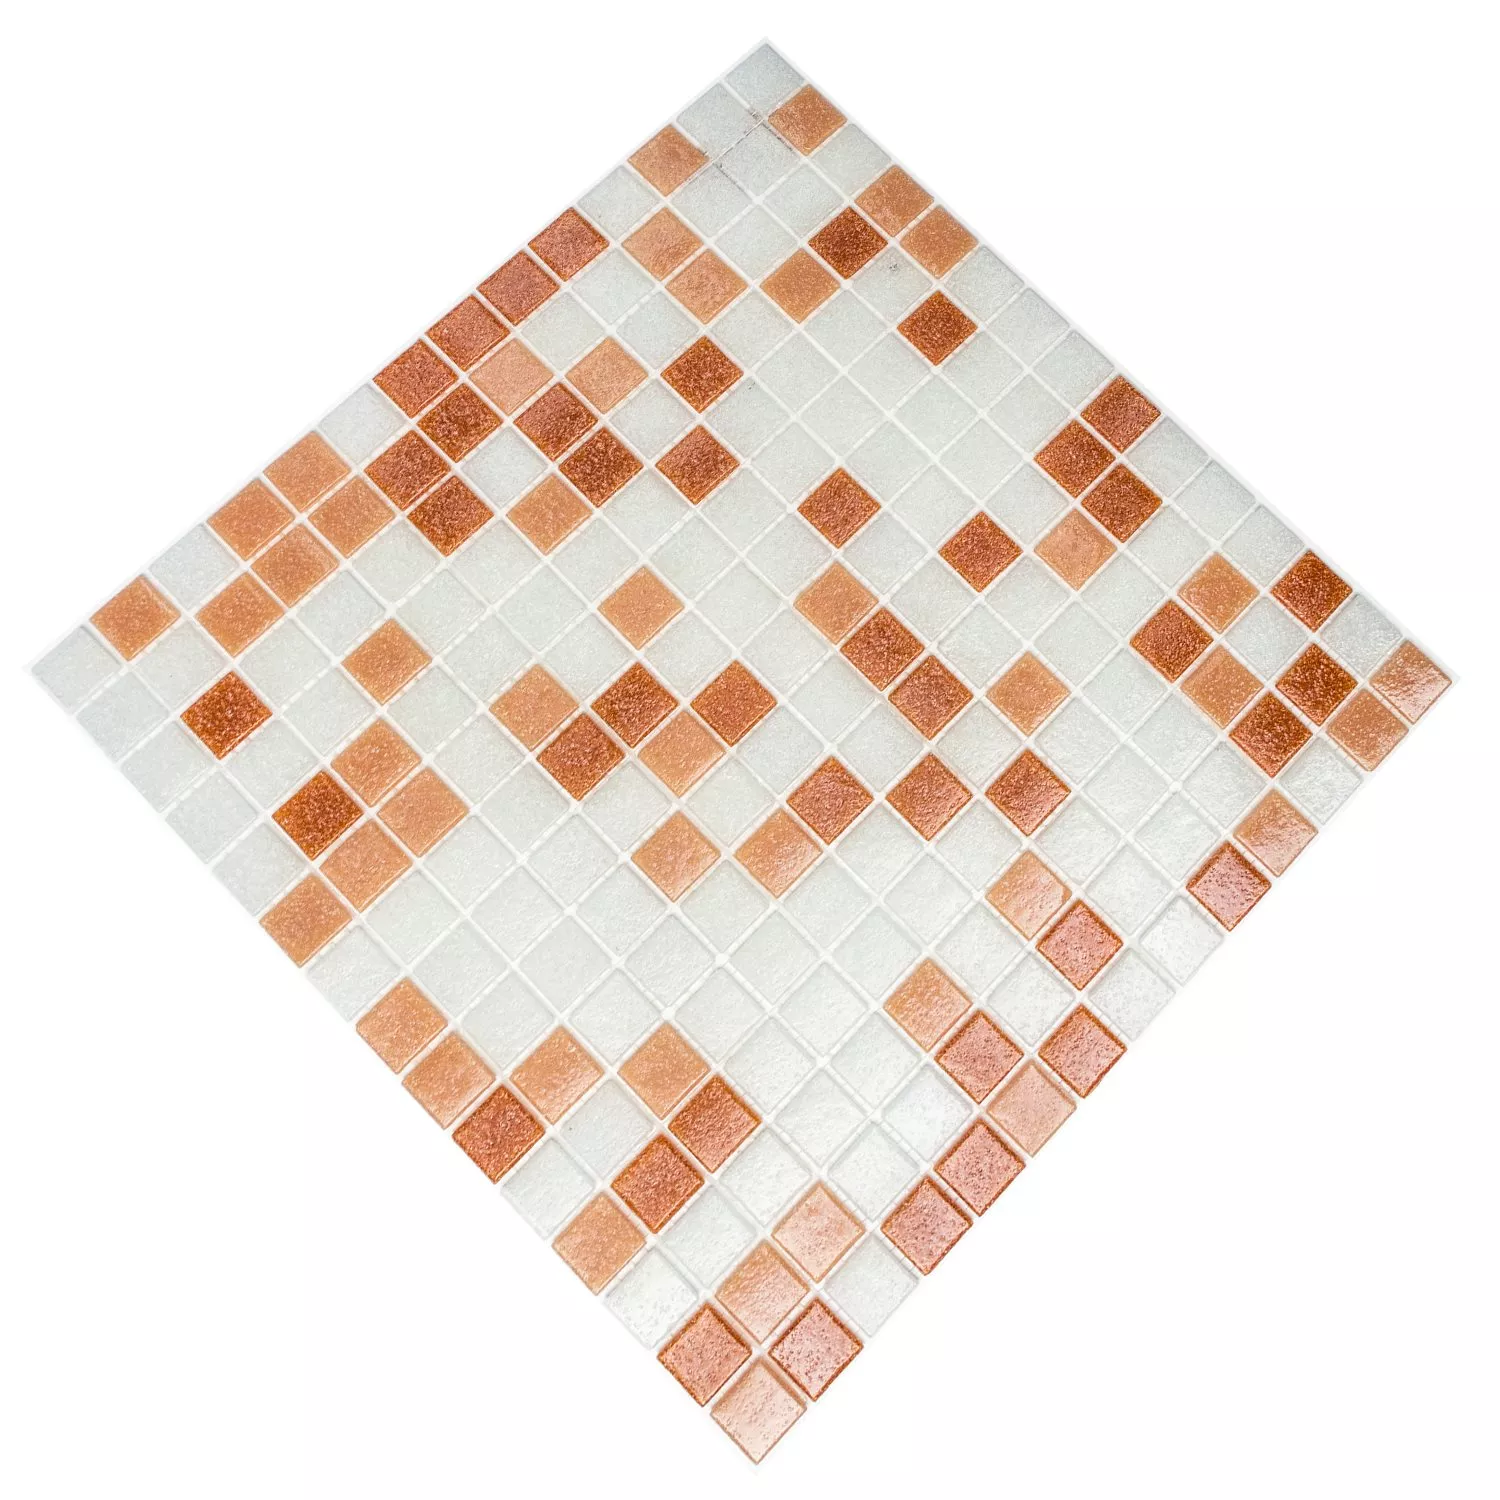 Sample Mosaic Tiles Glass White Brown